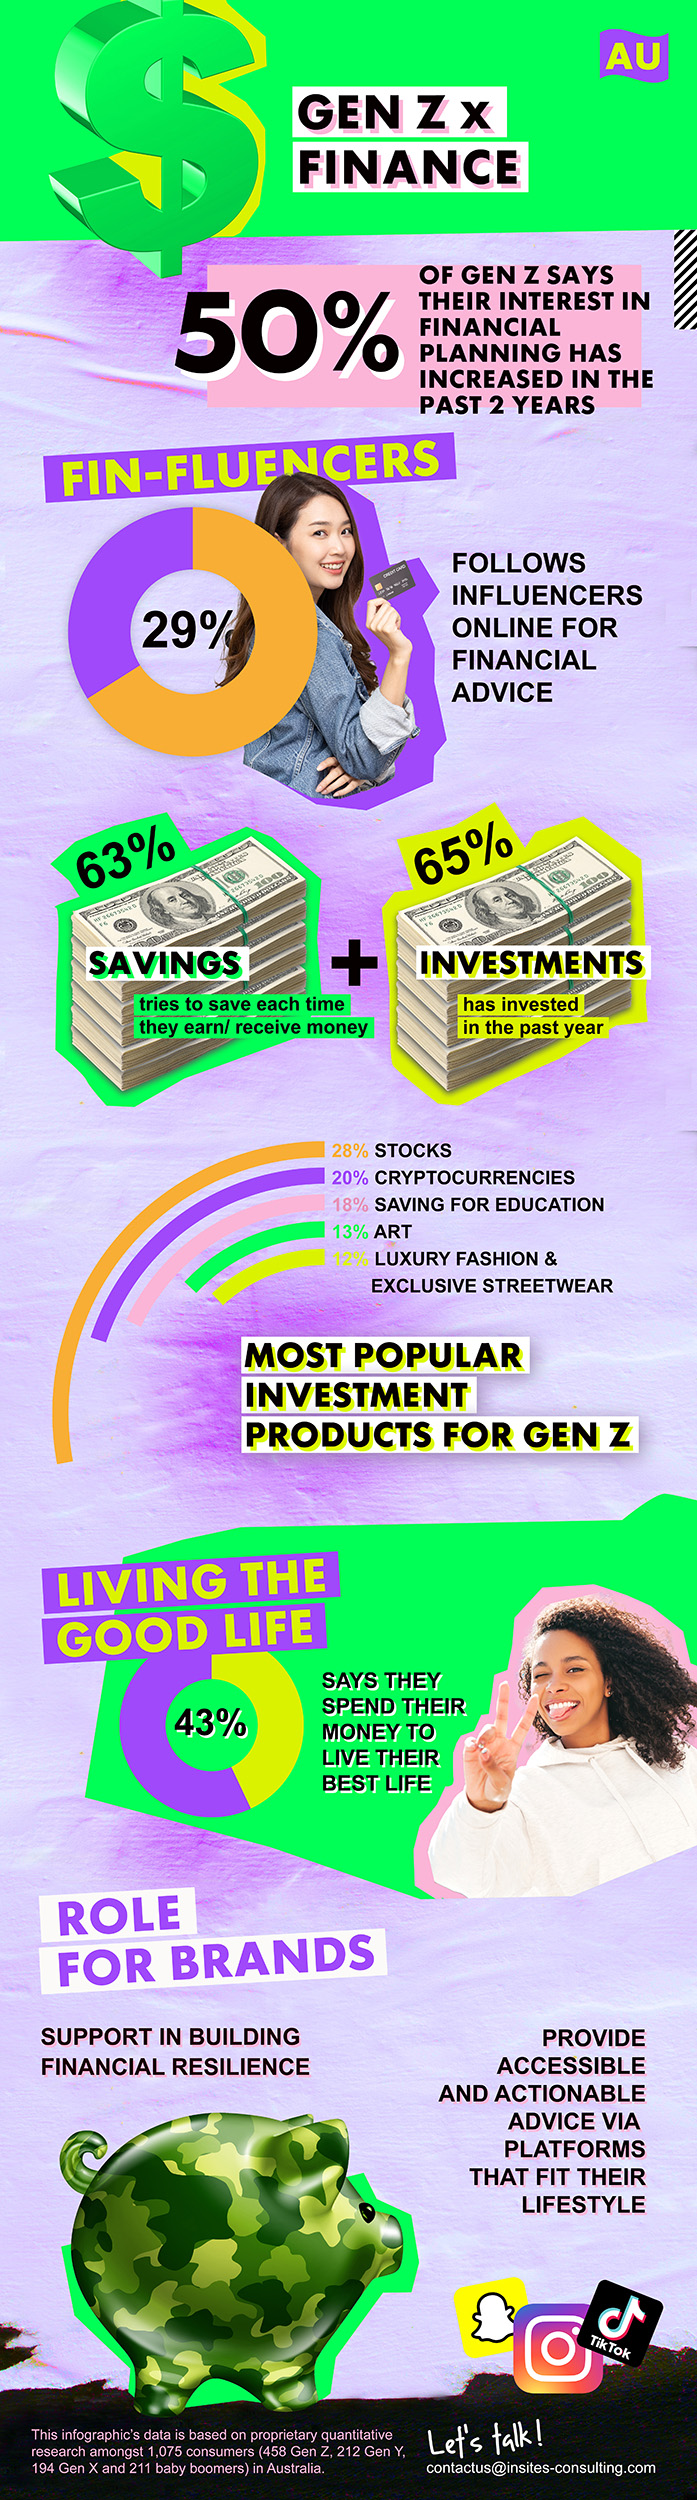 Gen Z x Finance AU Infographic